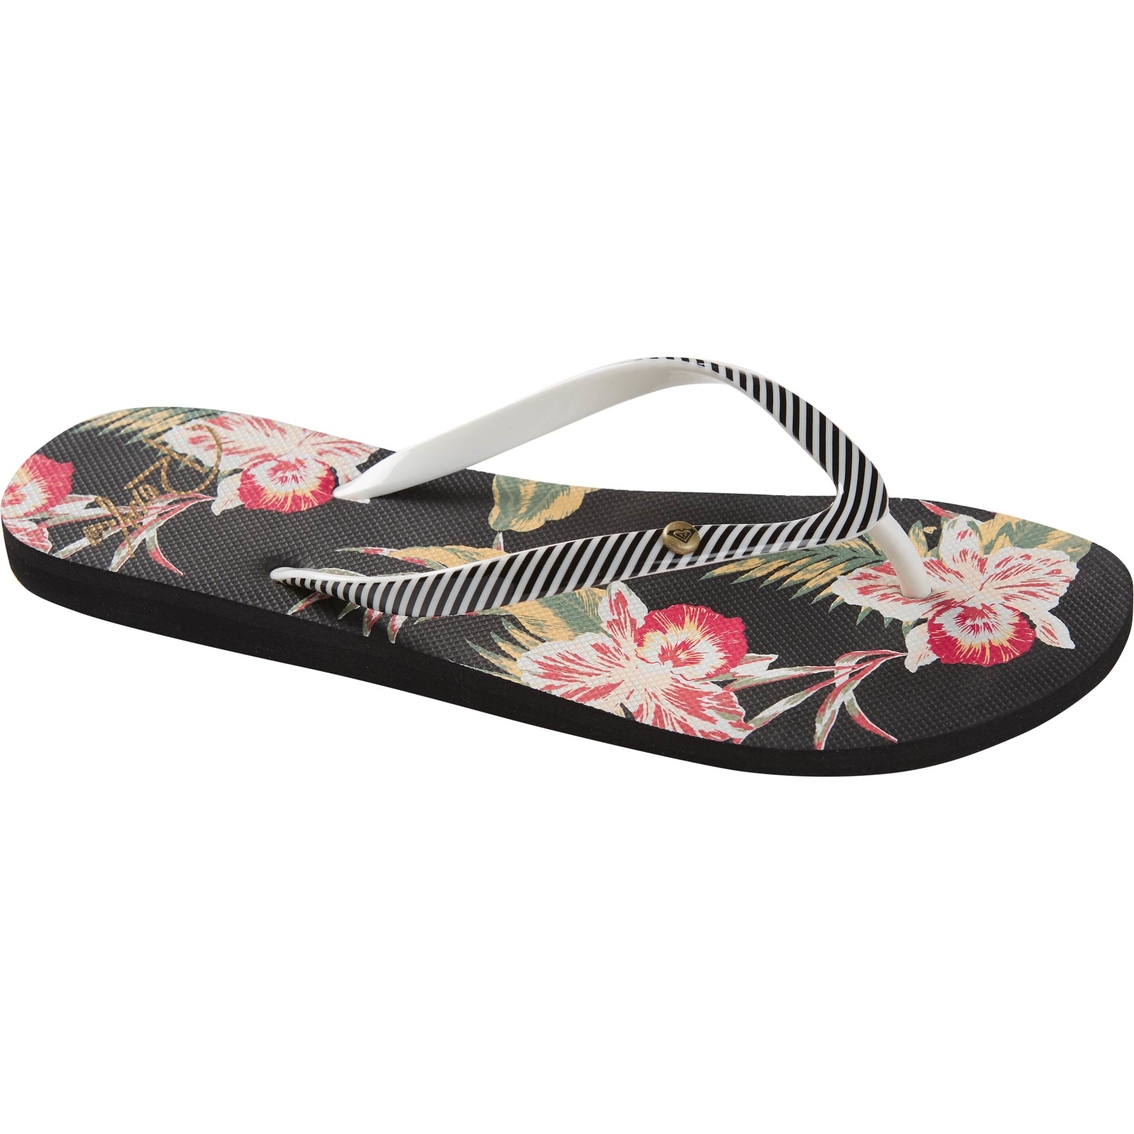 Roxy Portofino Ii Beach Sandals | Sandals | Shoes | Shop The Exchange